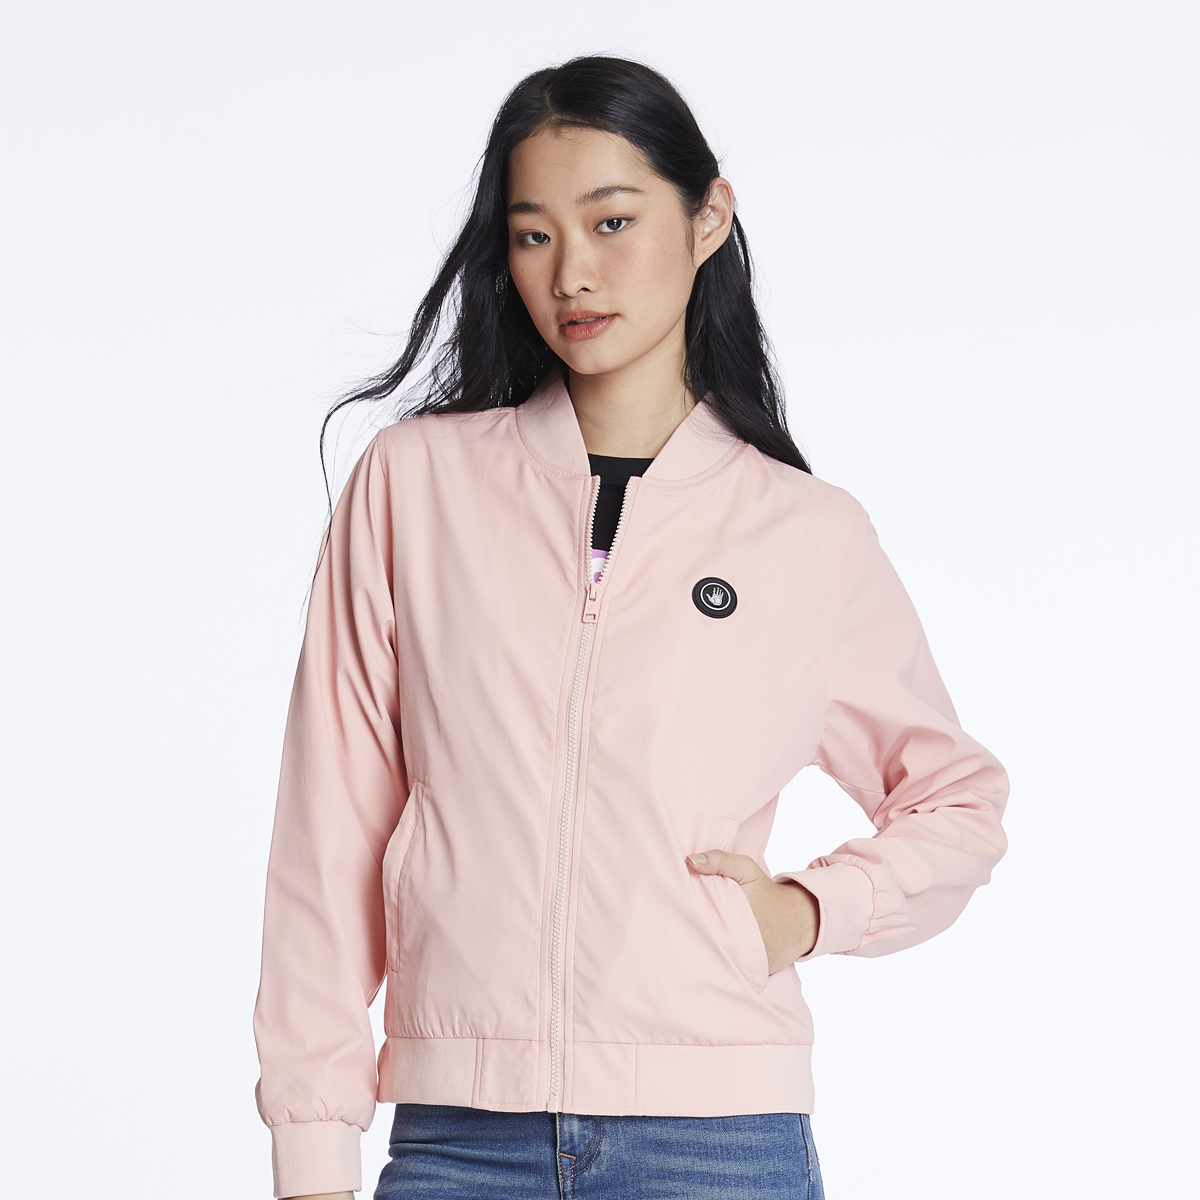 BODY GLOVE Women's Basic Jacket แจ็กเก็ต ผู้หญิง สีชมพู-15